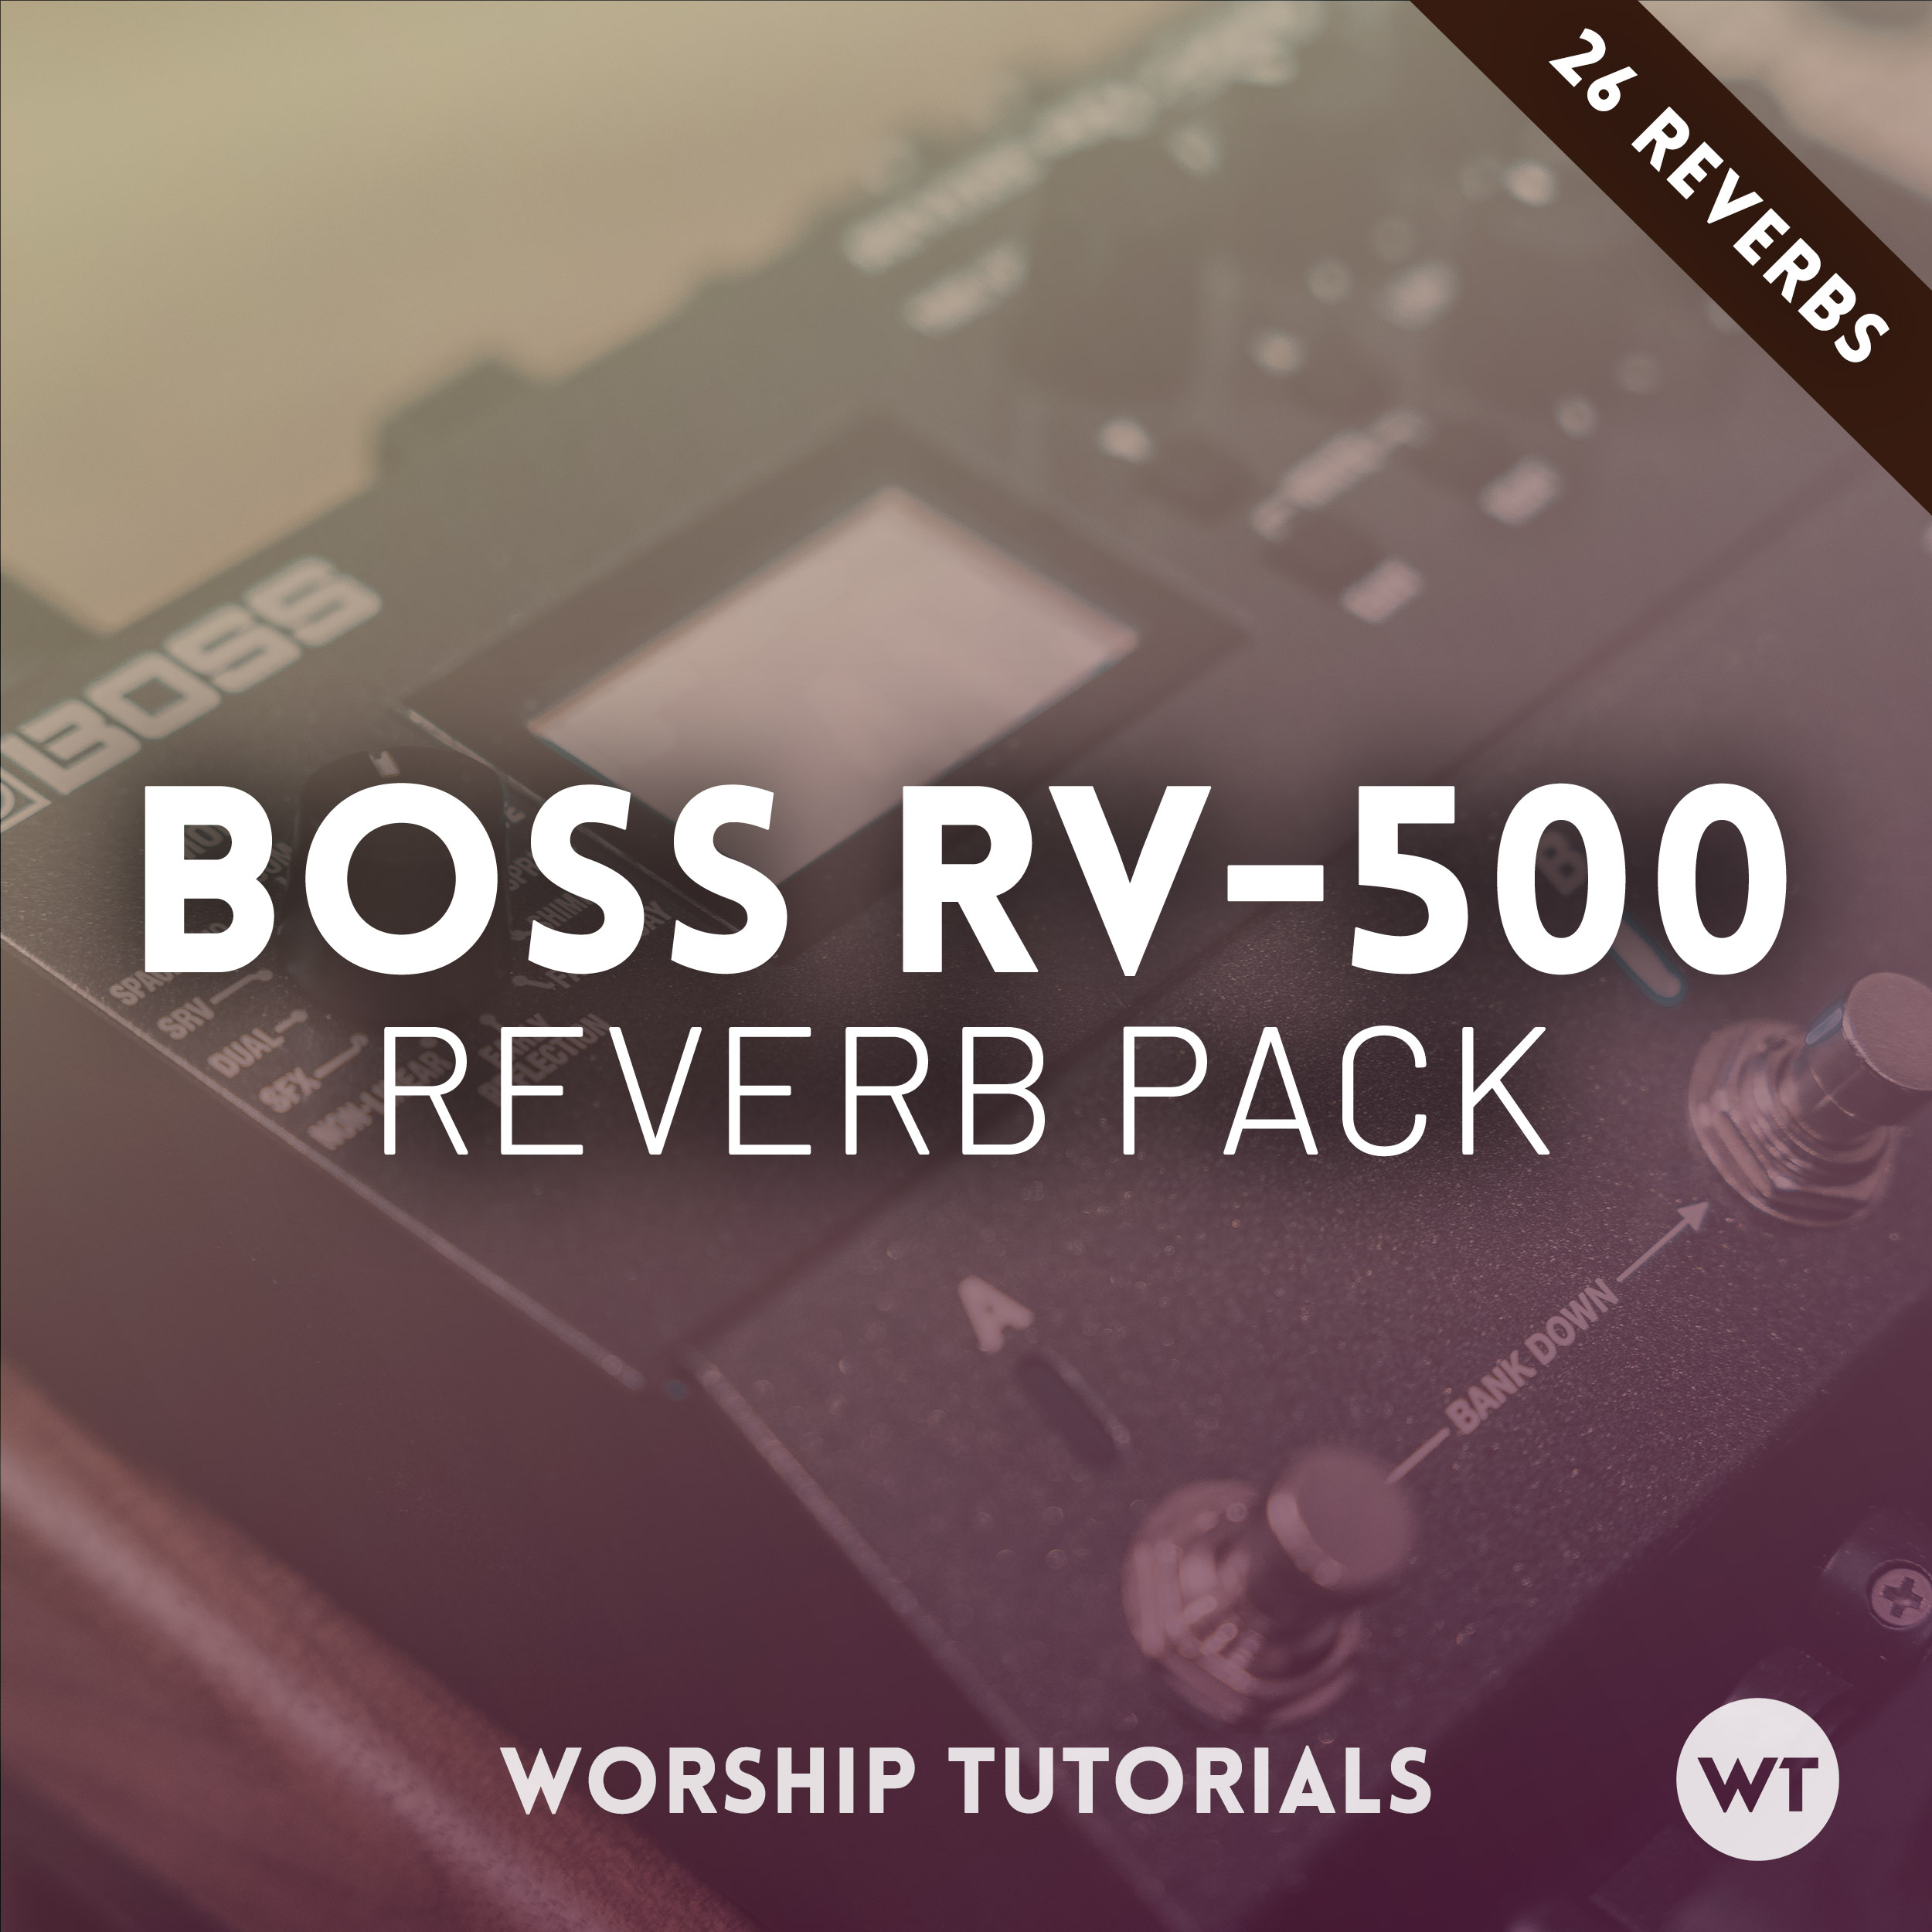 Worship　Tutorials　Reverb　RV-500　BOSS　Pack